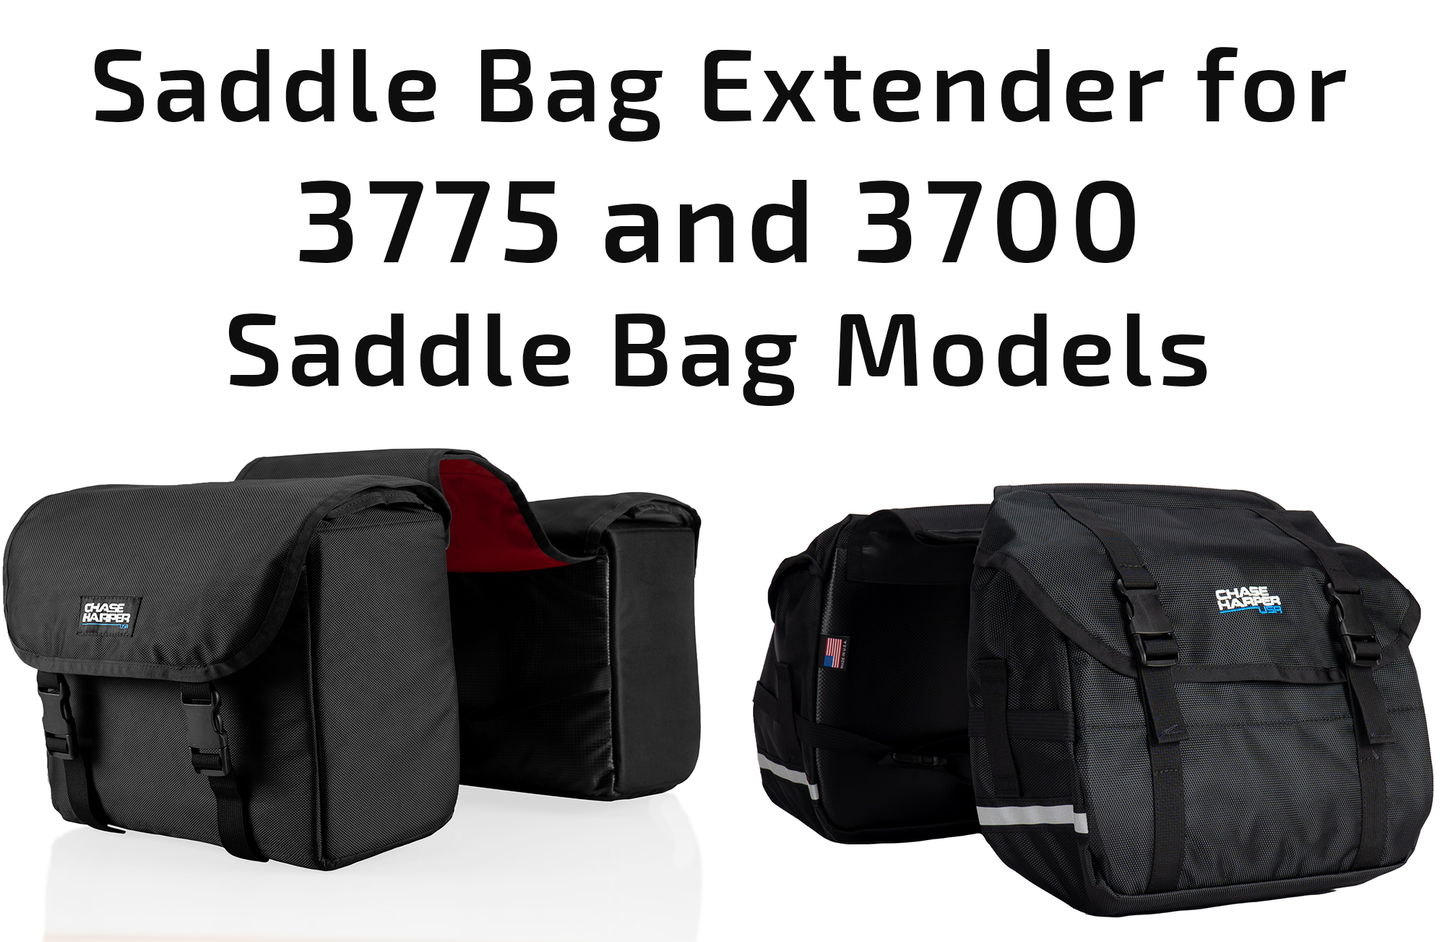 Saddle Bag Extenders - 3700 and 3775 Models